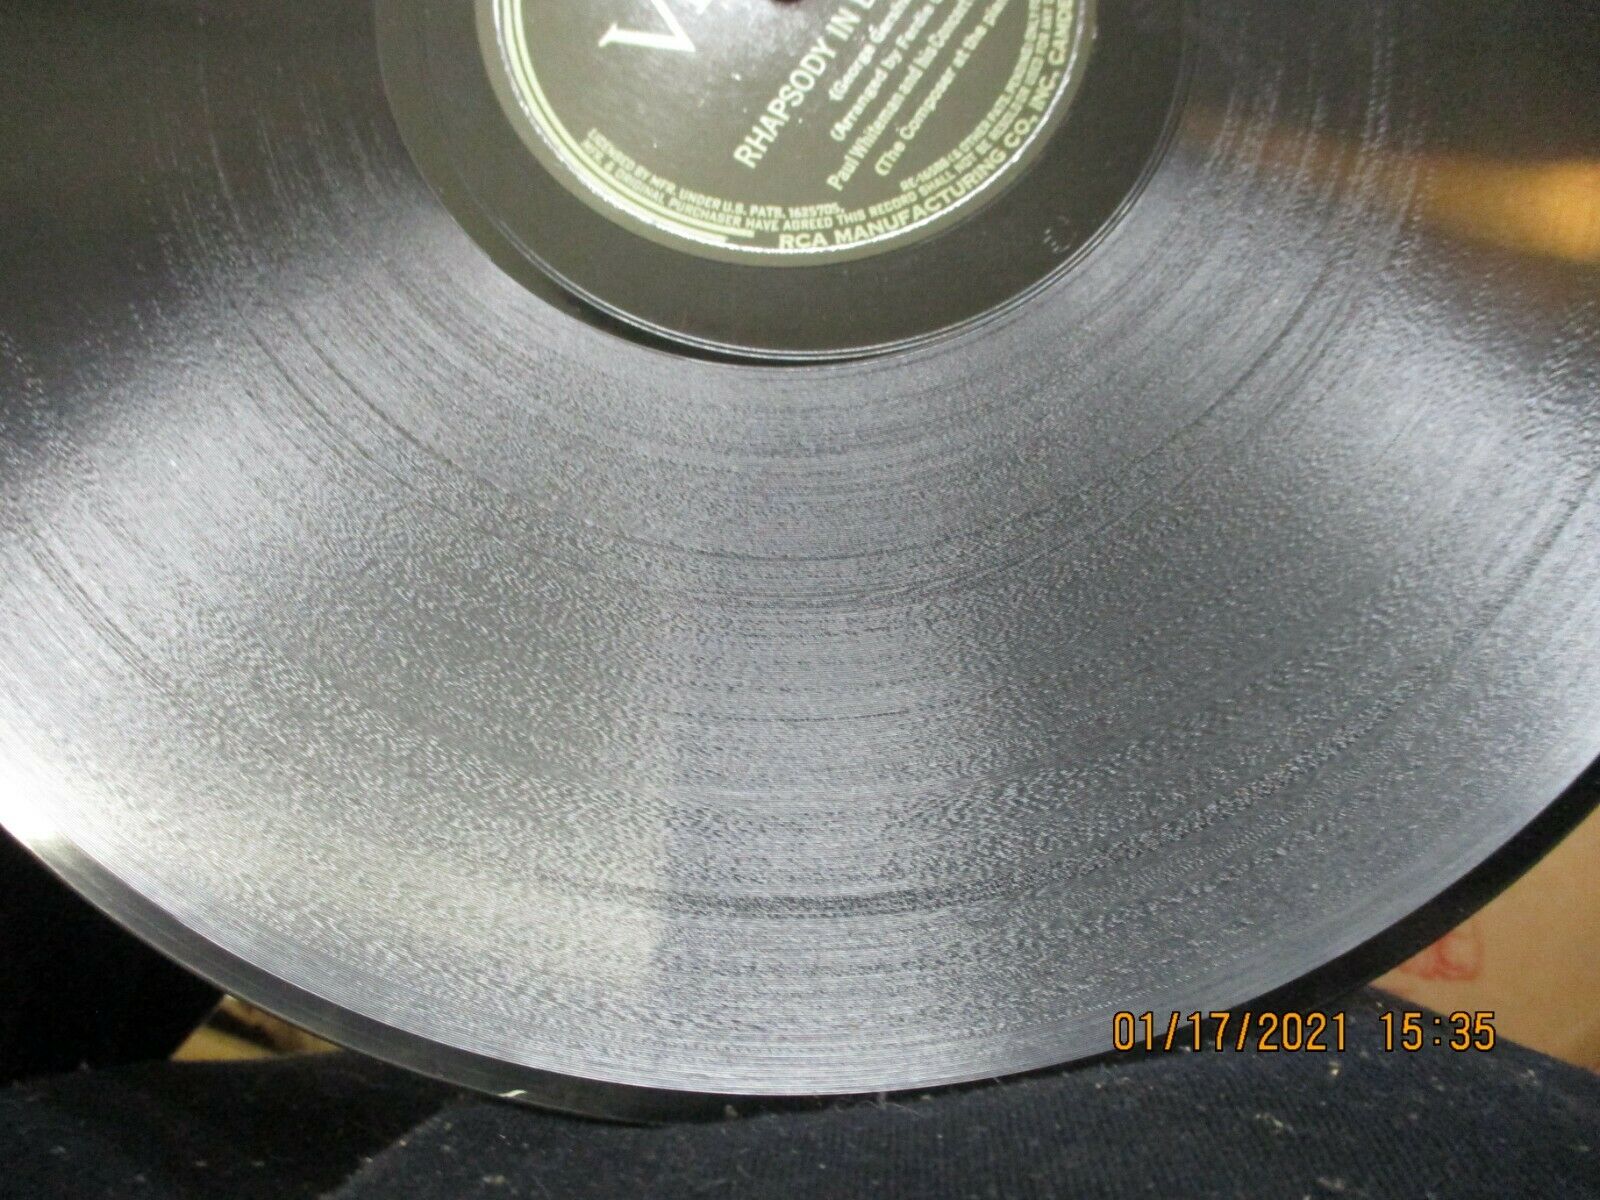 Pic 1 George Gershwin - VICTOR 35822 - Rhapsody In Blue - Paul Whiteman Orch. VG+ EX